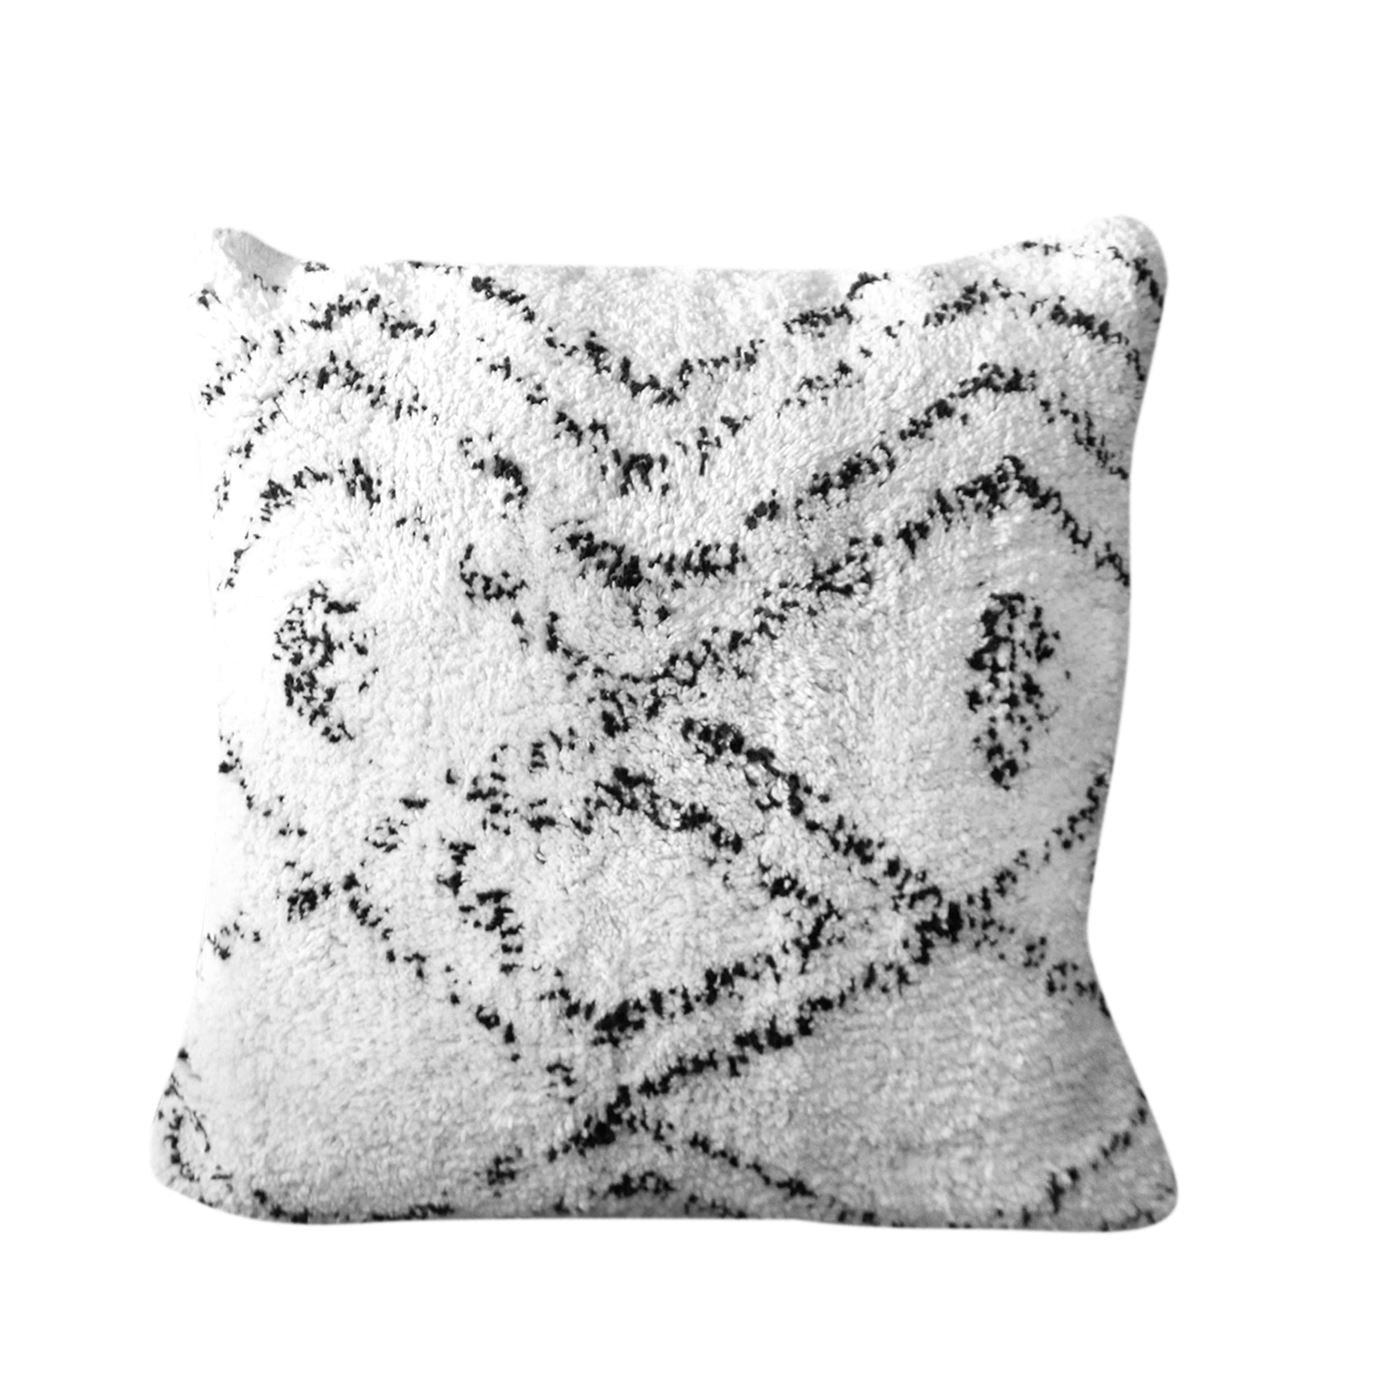 Fissa Pillow, Cotton, Natural White, Charcoal